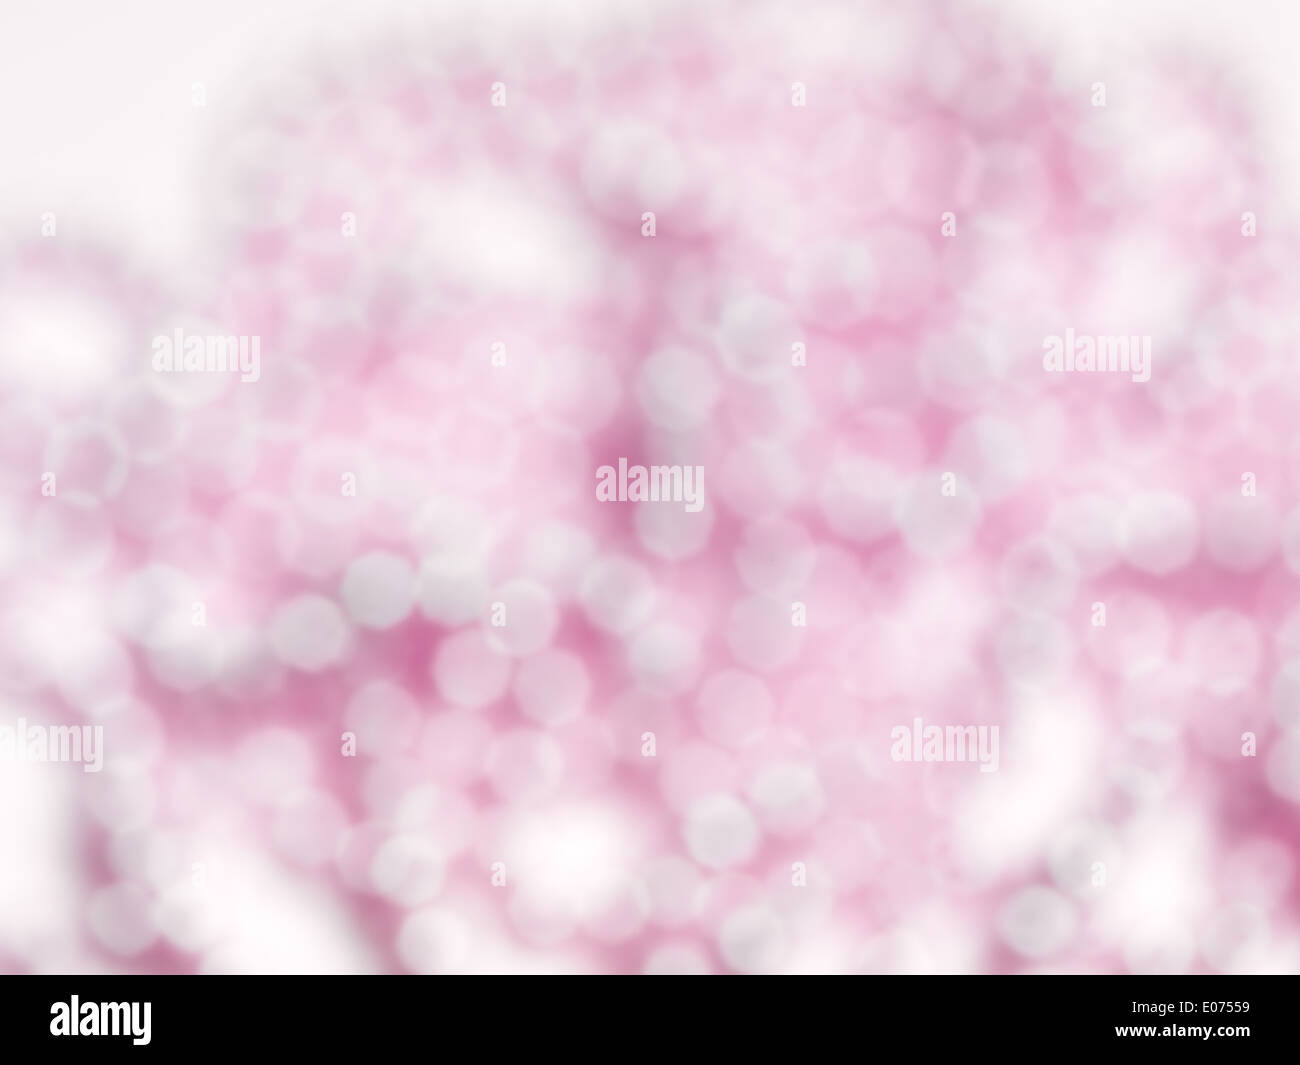 Abstrakt rosa glänzenden unscharf Out-of-Focus Hintergrundtextur Stockfoto